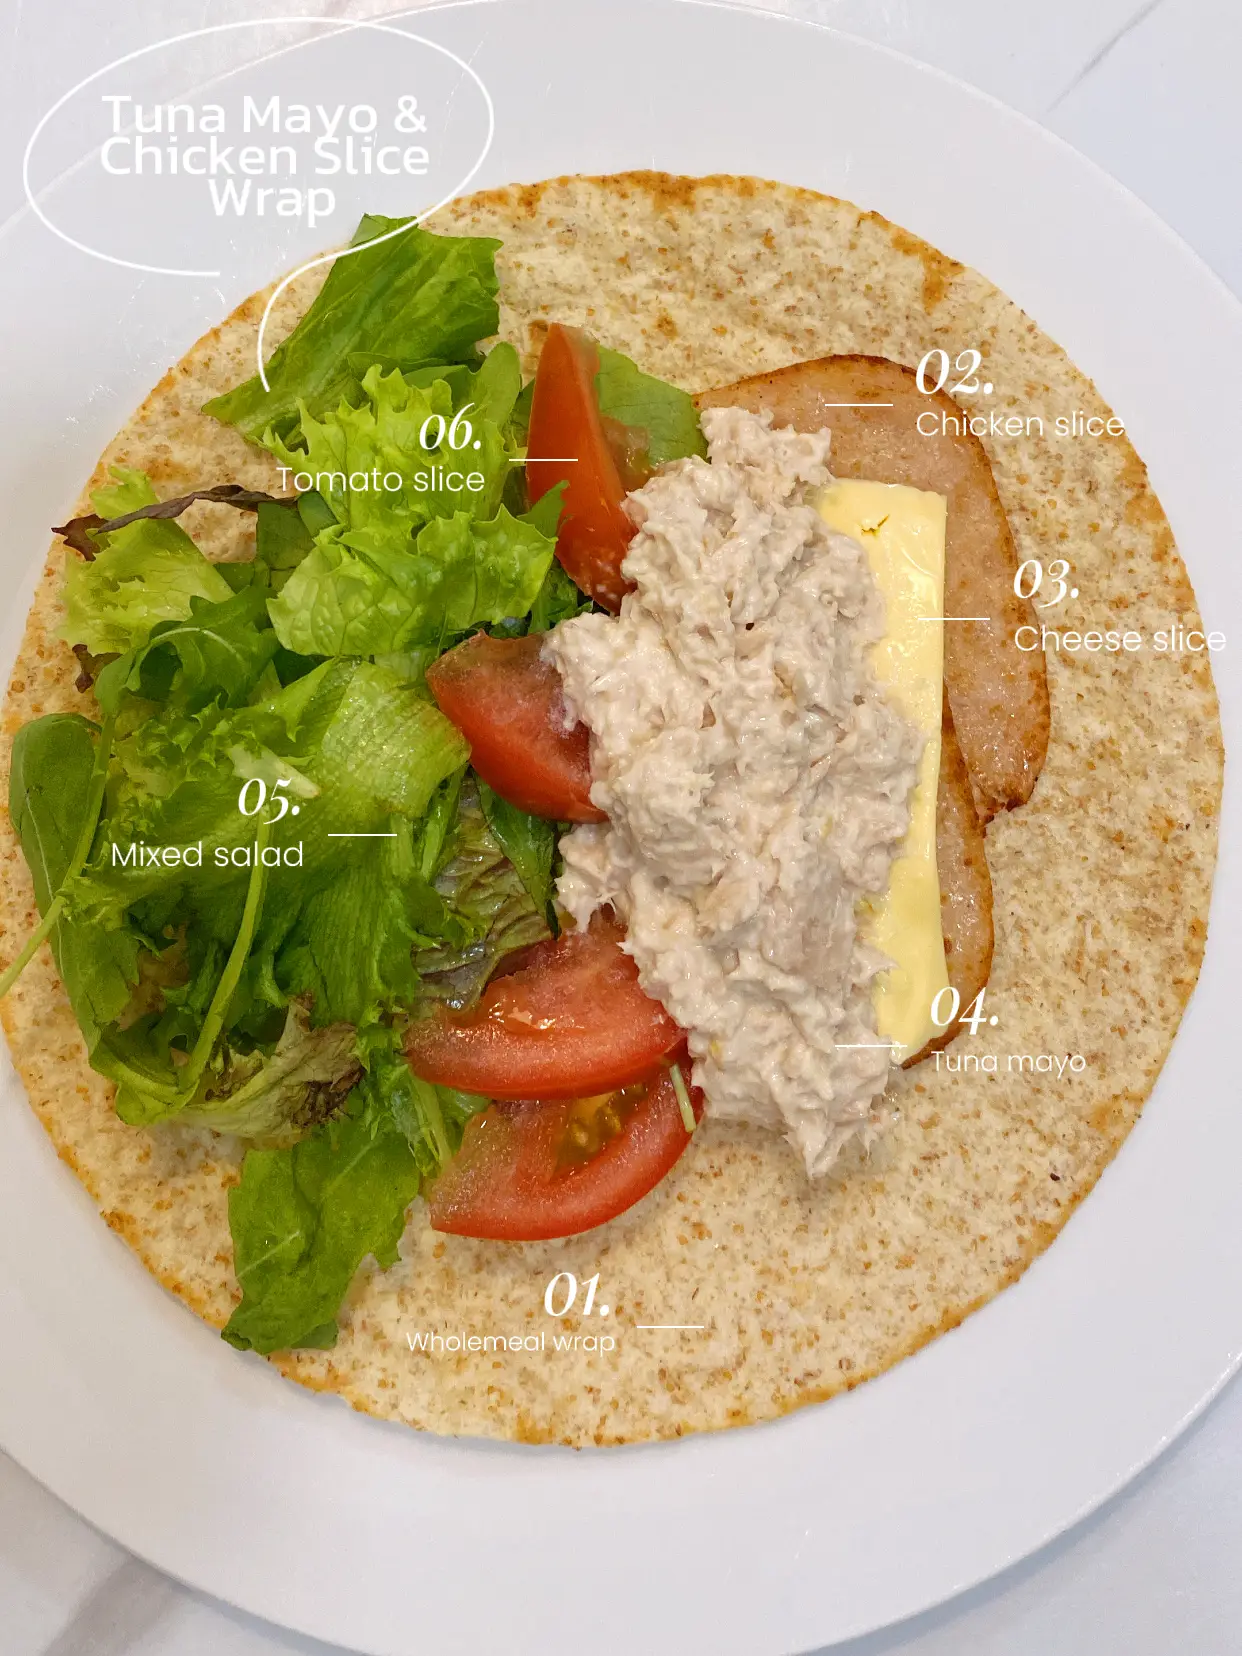 Tuna Mayo & Chicken Slice wrap's images